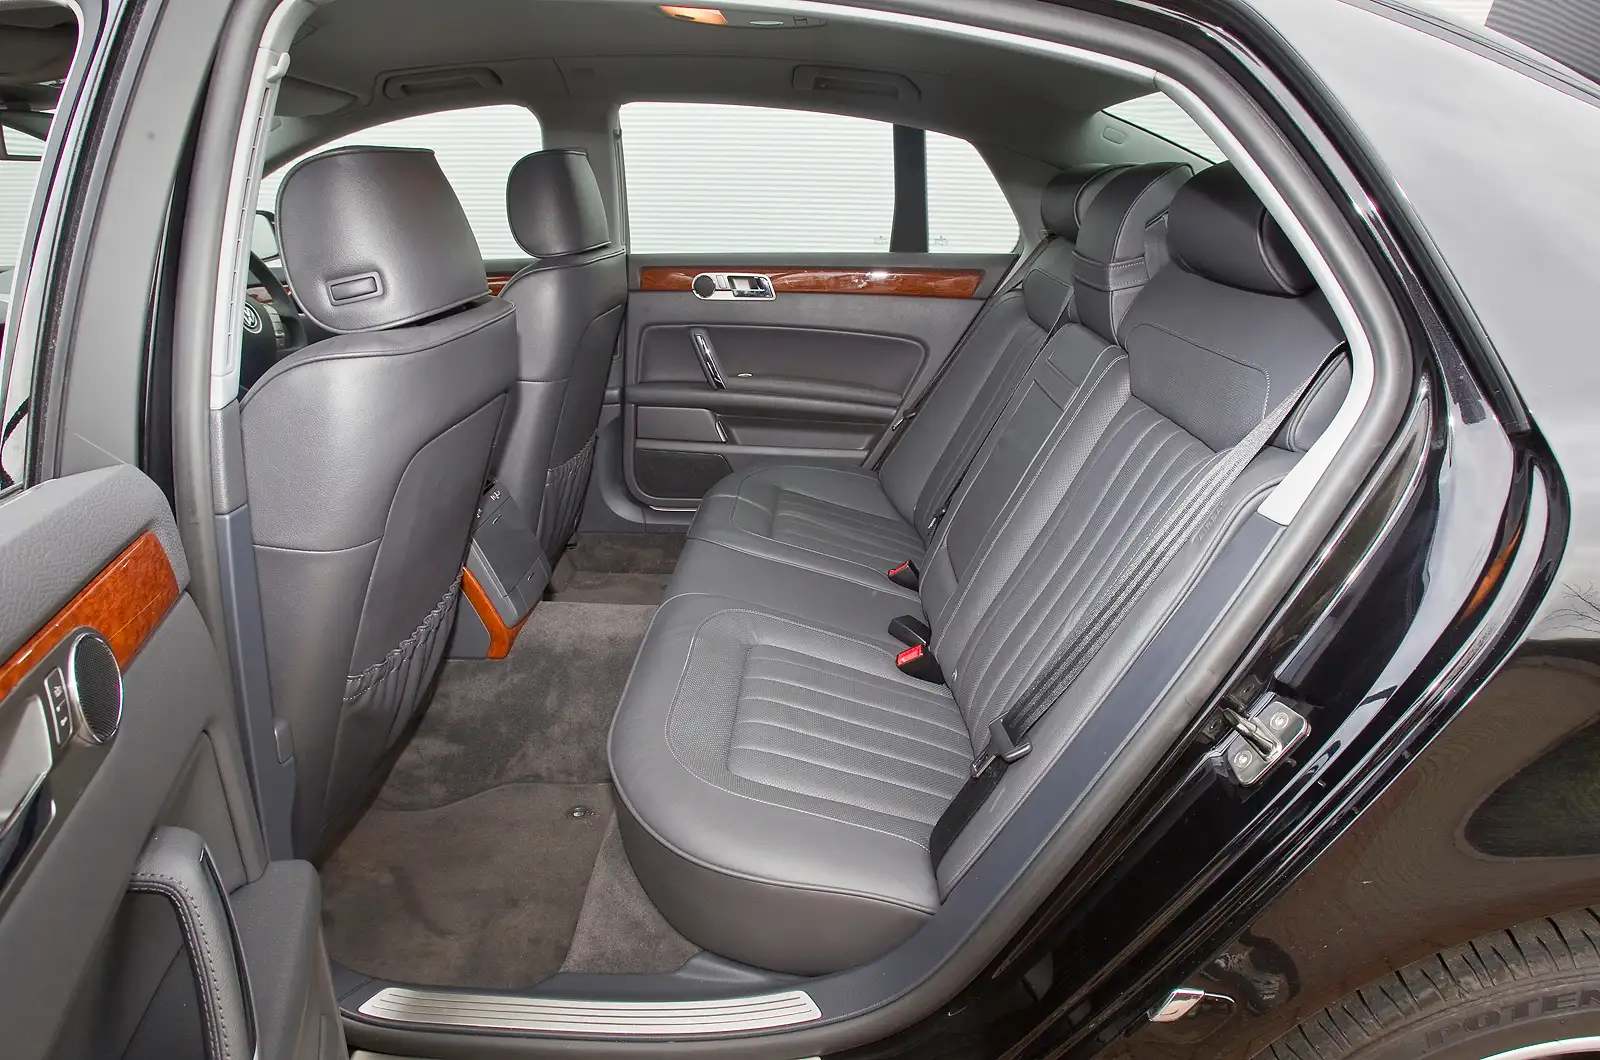 Volkswagen Phaeton interior - Seats